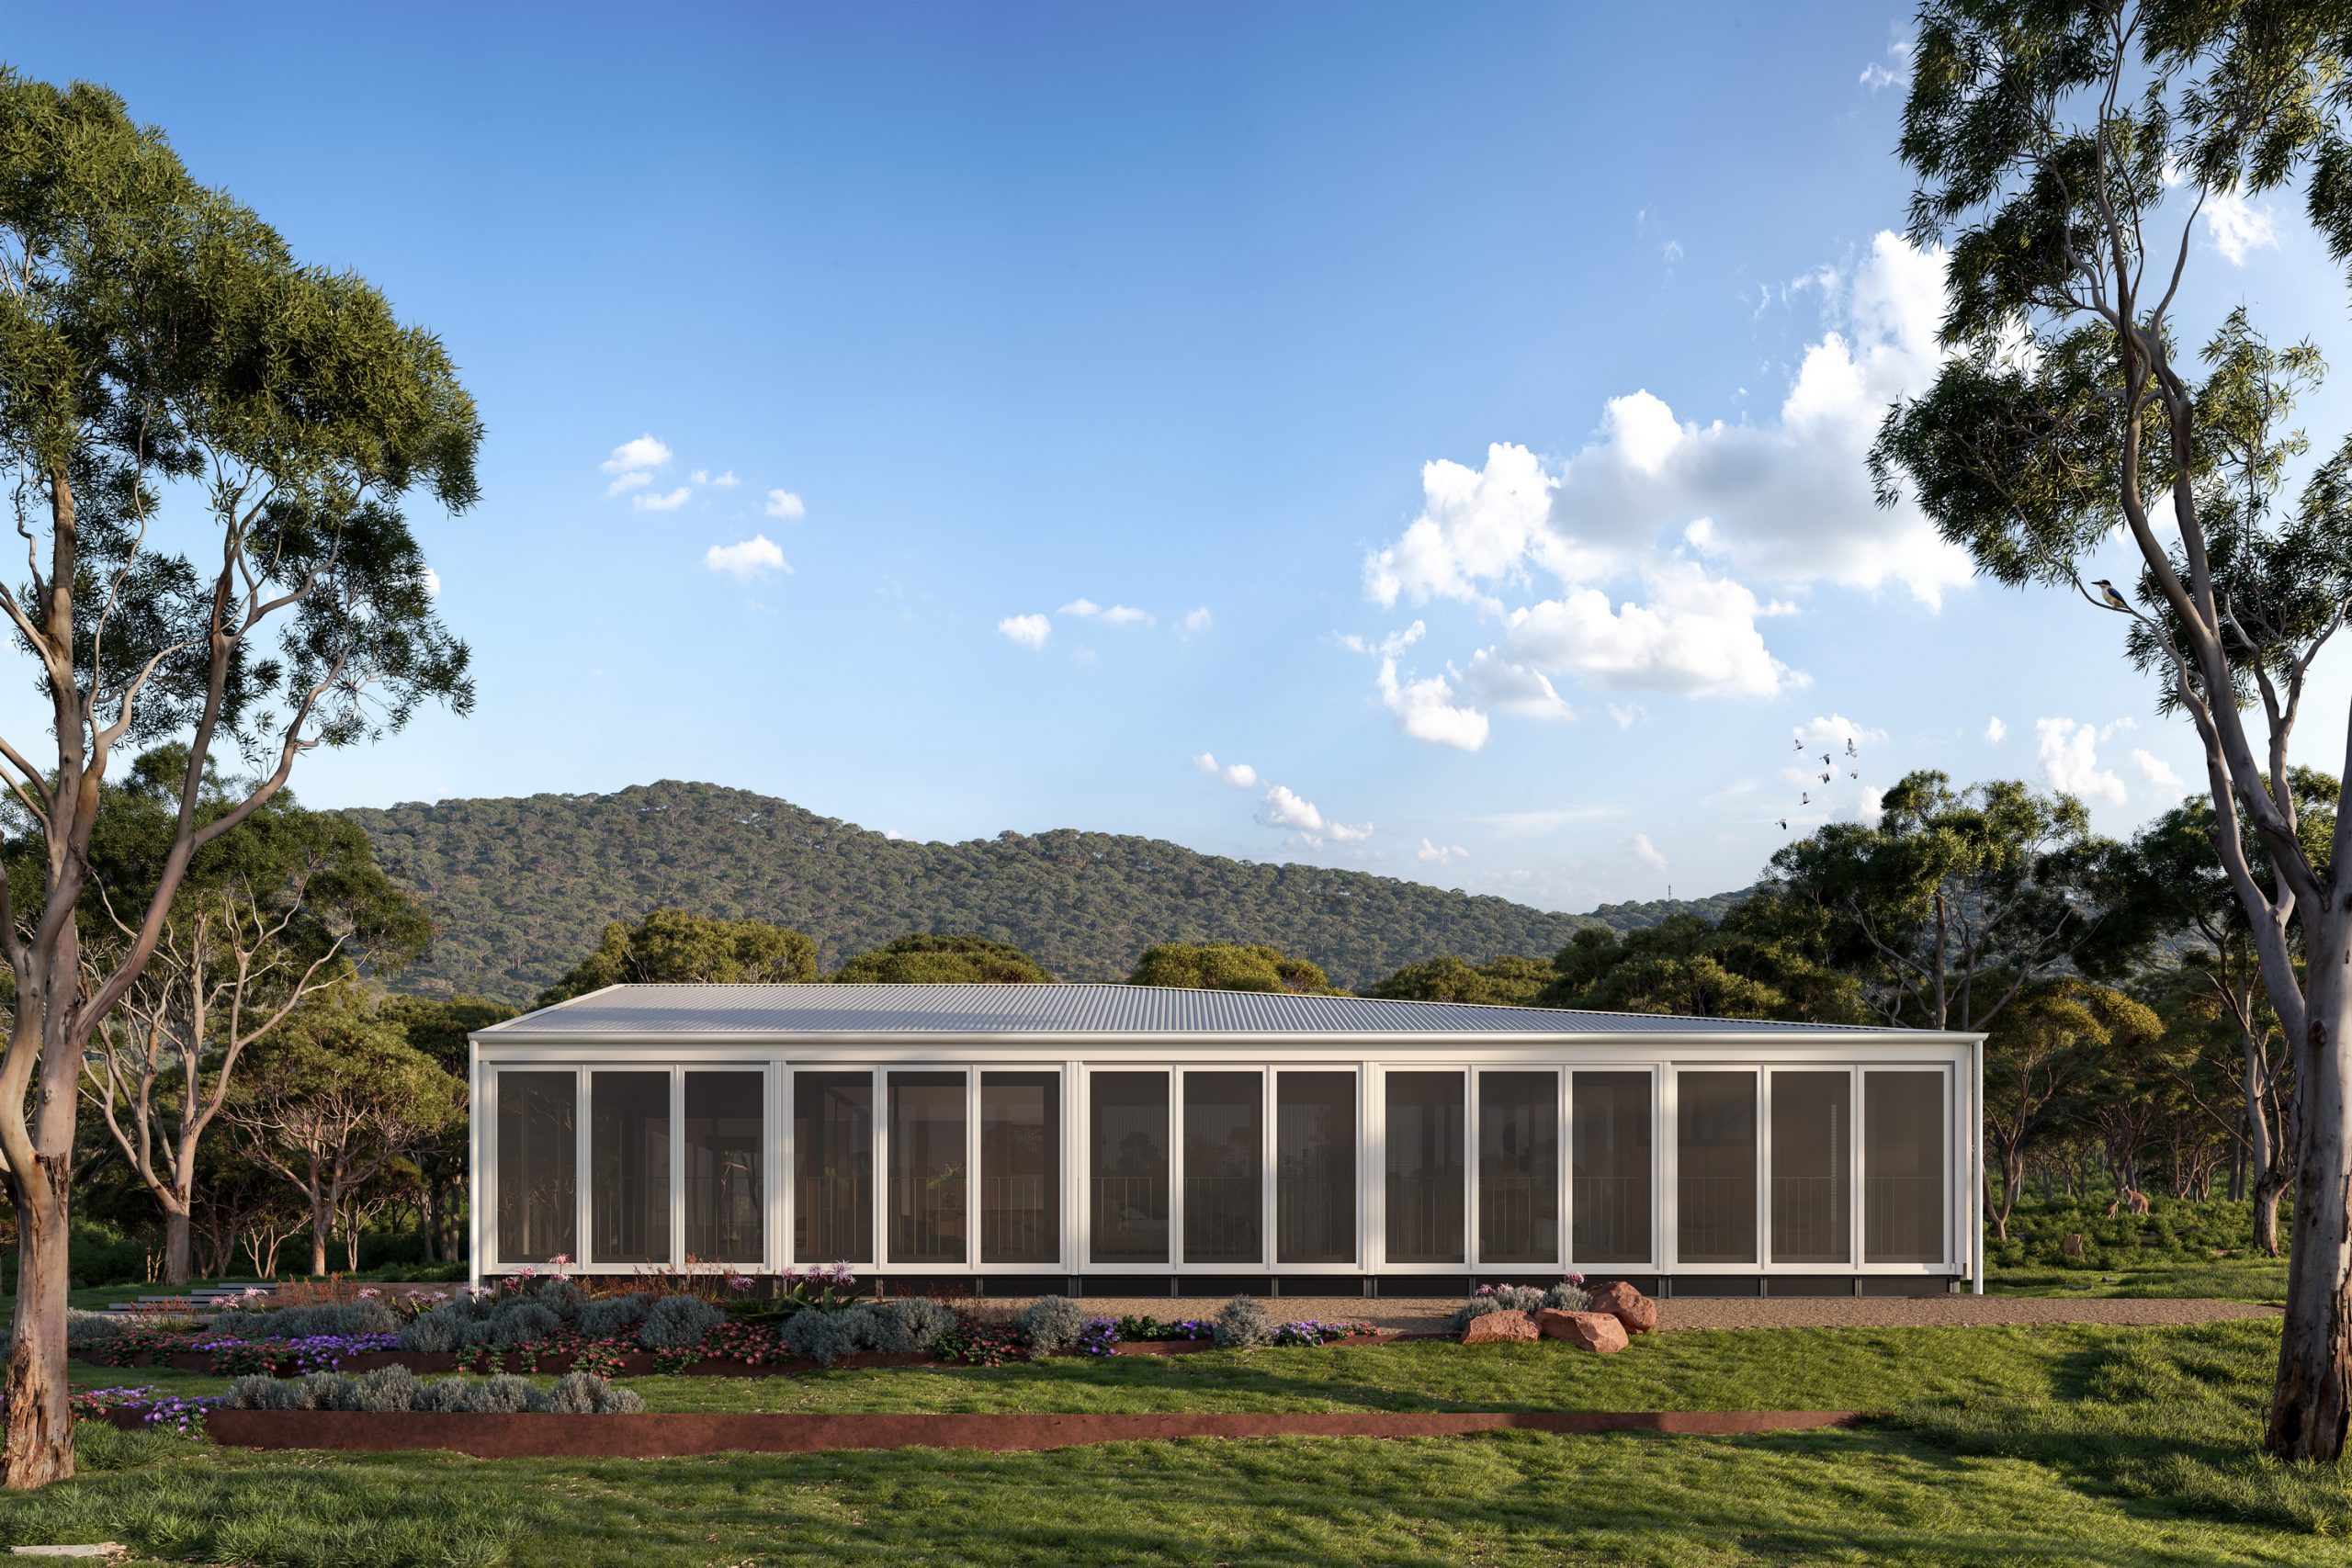 Fortis-house-exterior-image-prefab-architecture-clear-day-image-render-3d-visualisation-archviz-bushfire